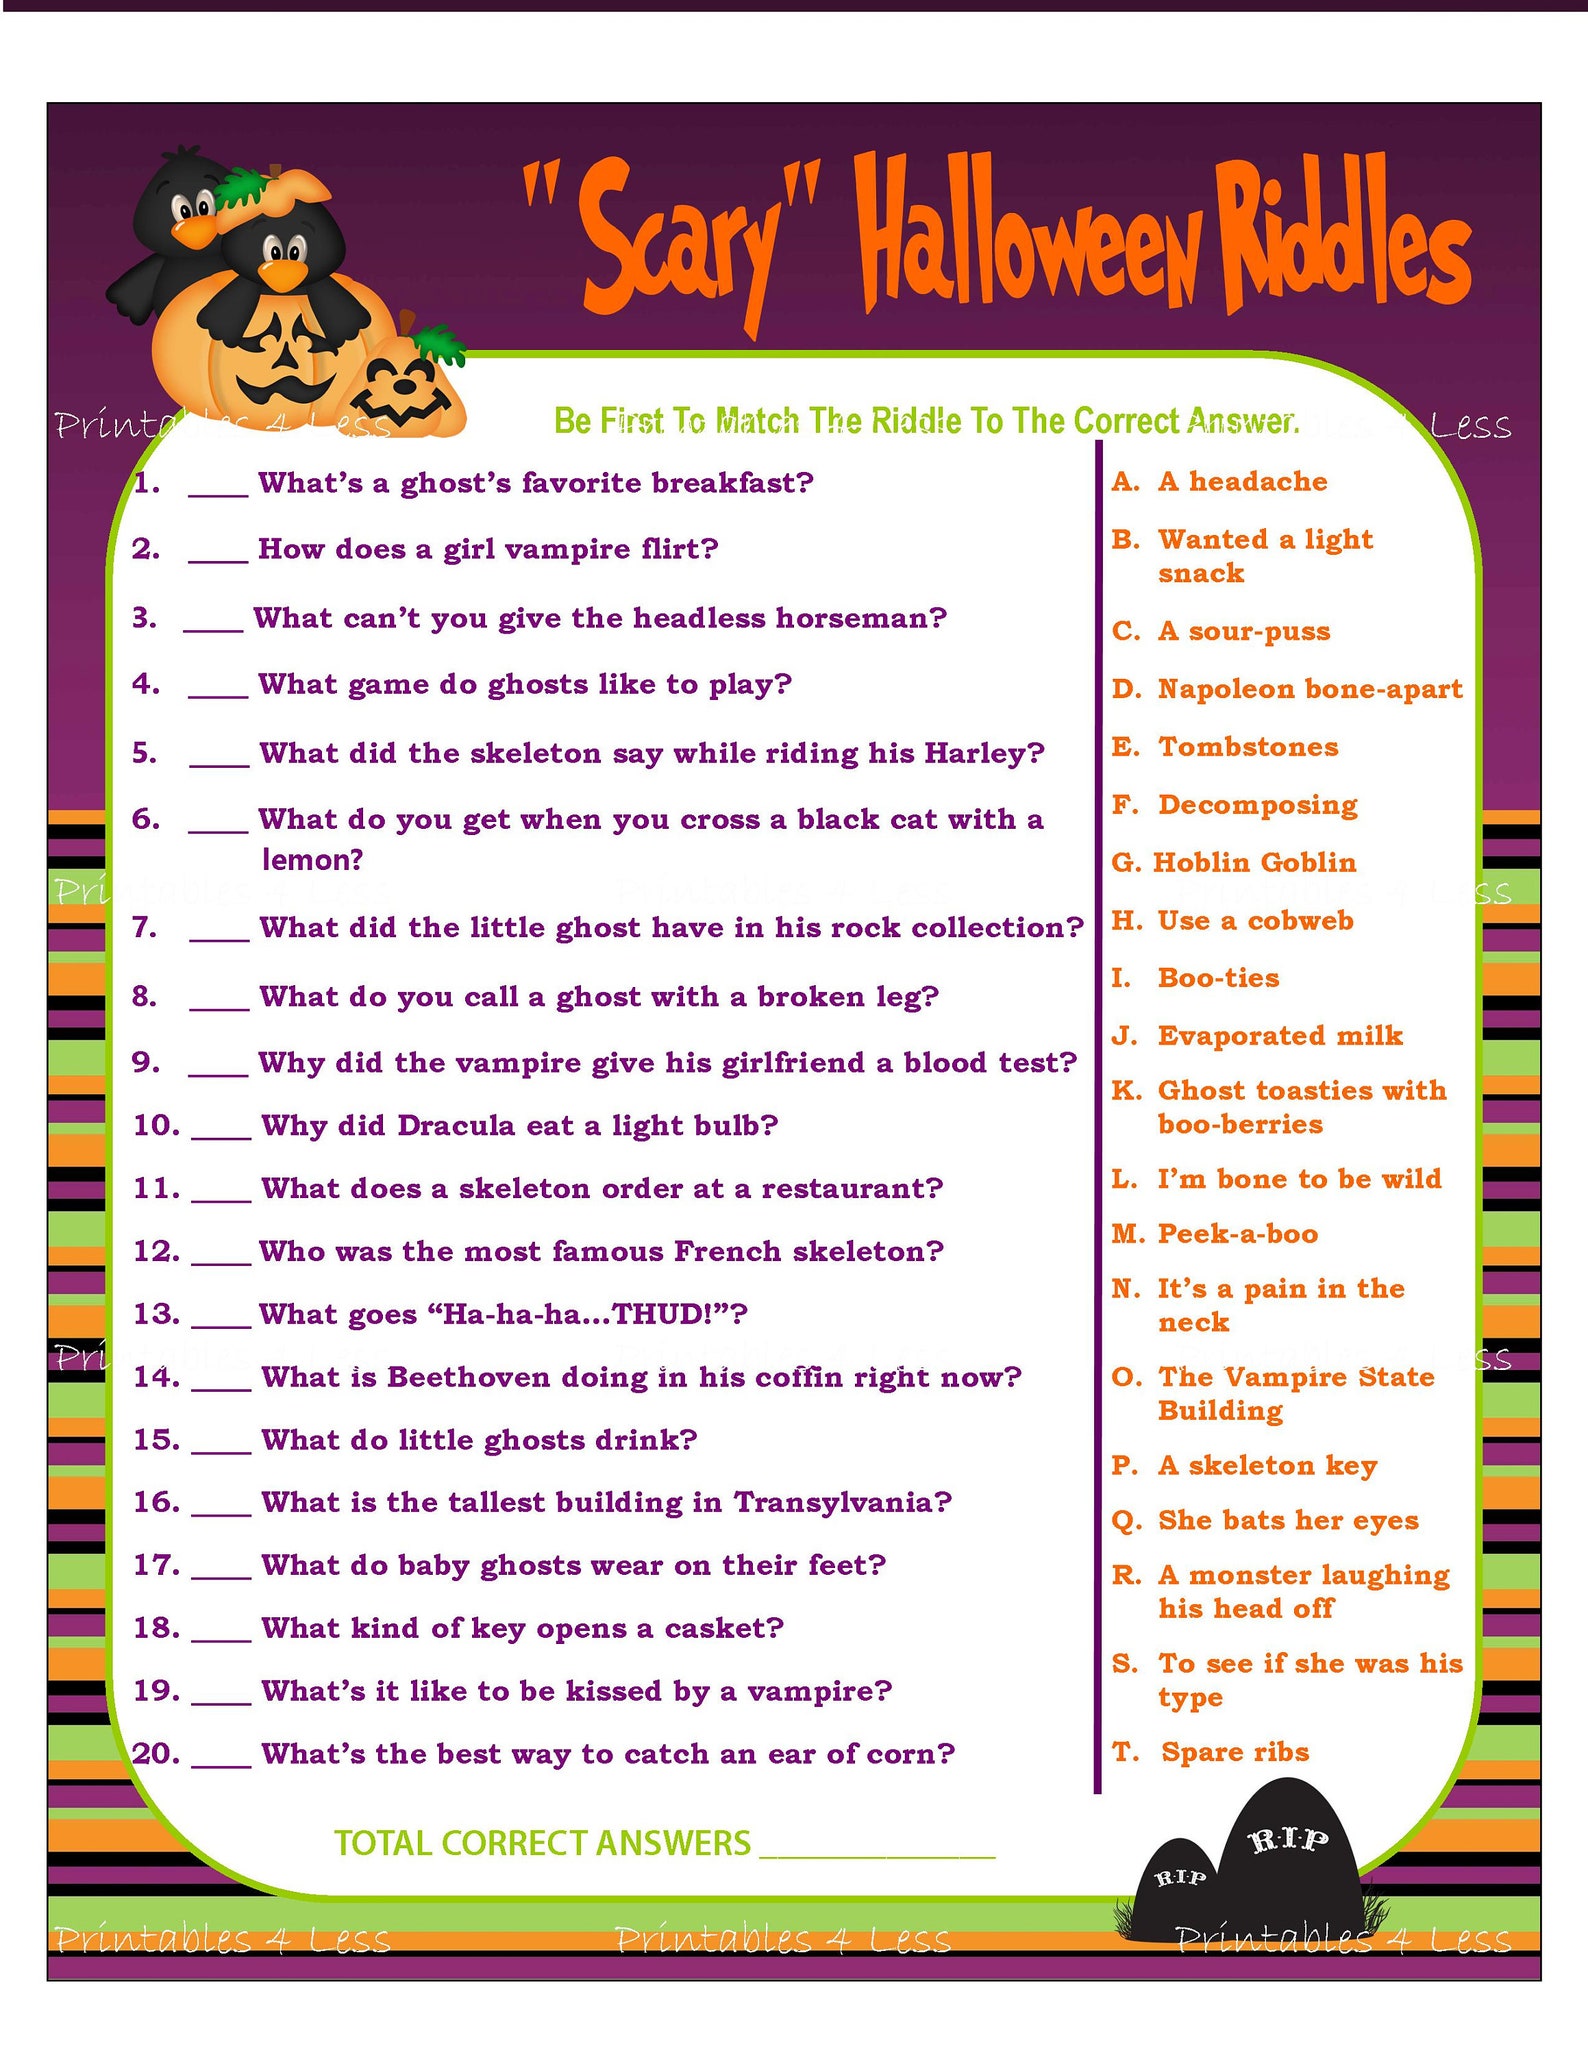 Halloween Brain Teasers Printable